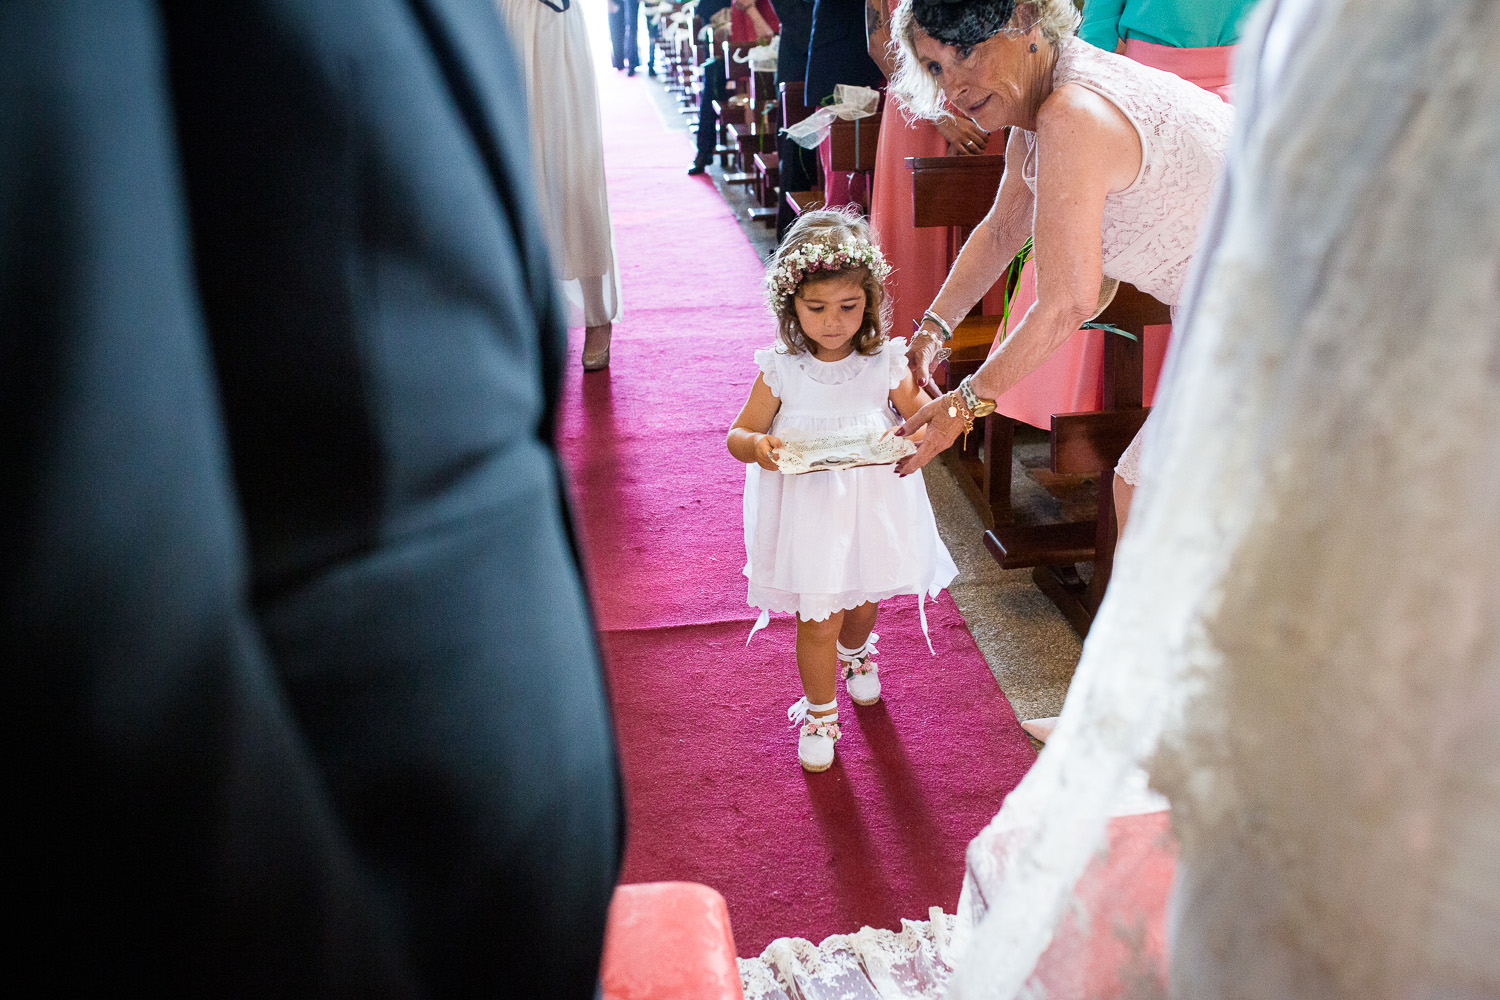 Fotografía de boda niña de arras en la iglesia